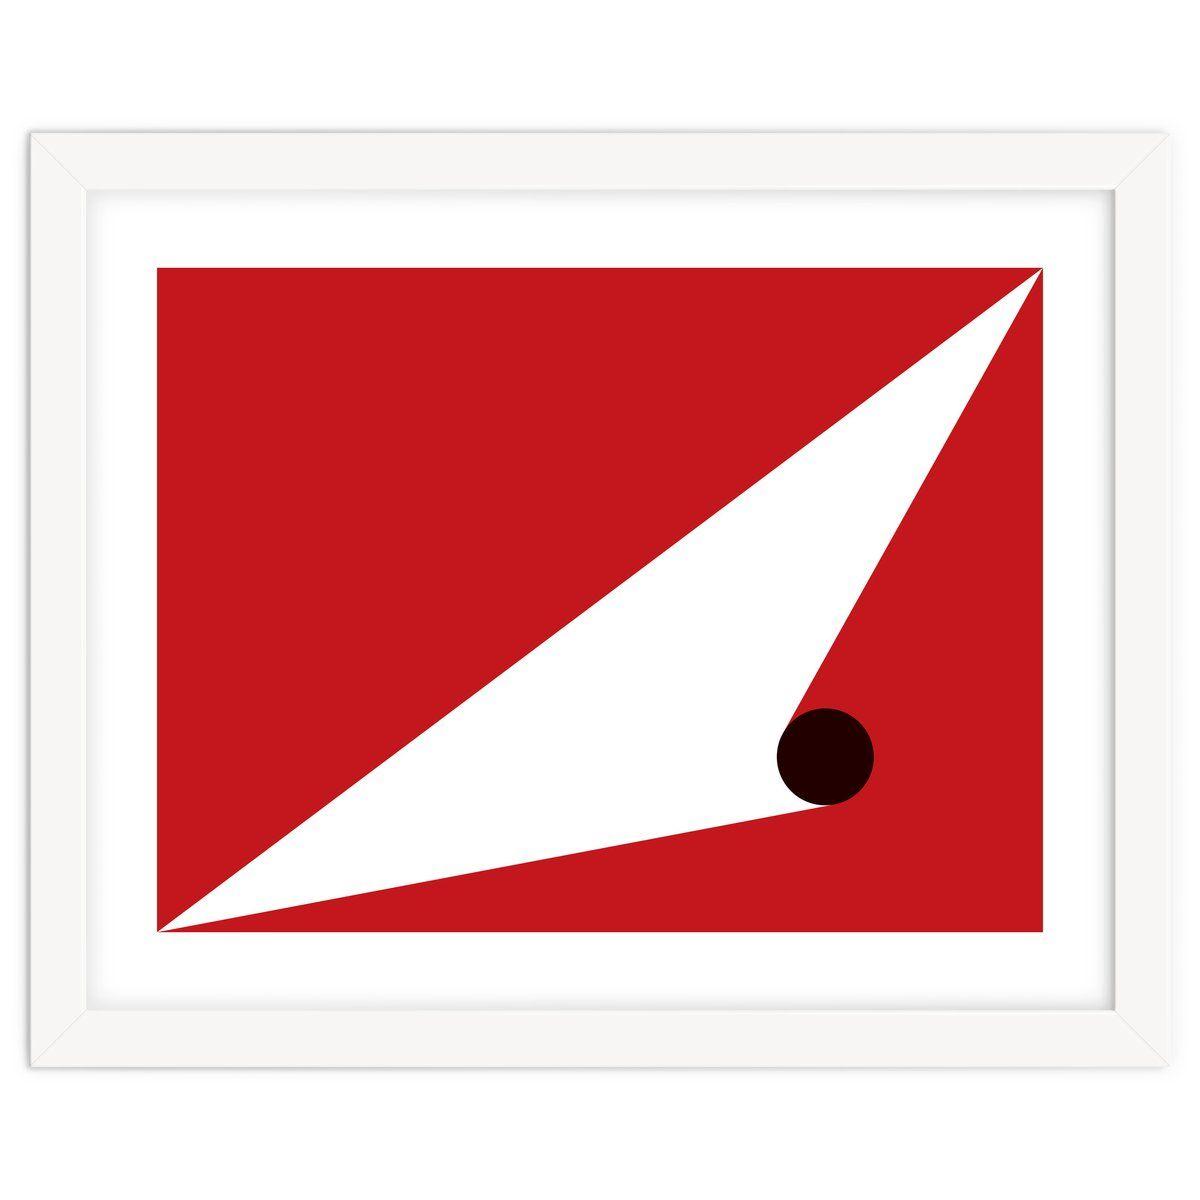 Red and White Geometric Logo - Geometric Shapes No. 71 - red, white & black Art Print by Gary ...